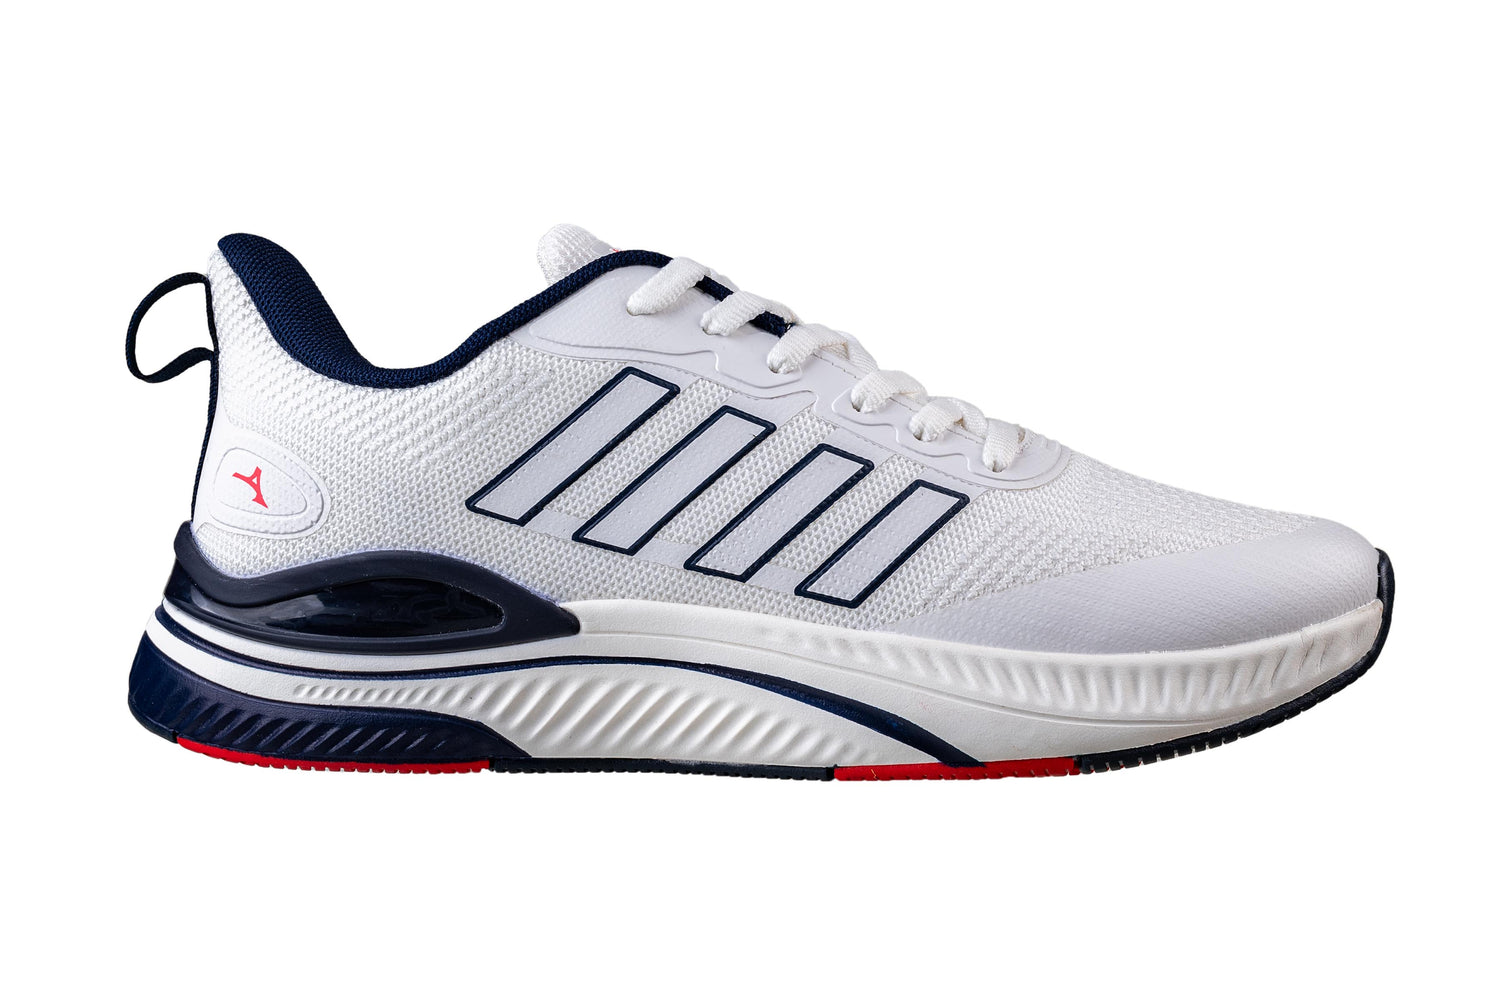 Abros Gents White / Navy Sports Shoe